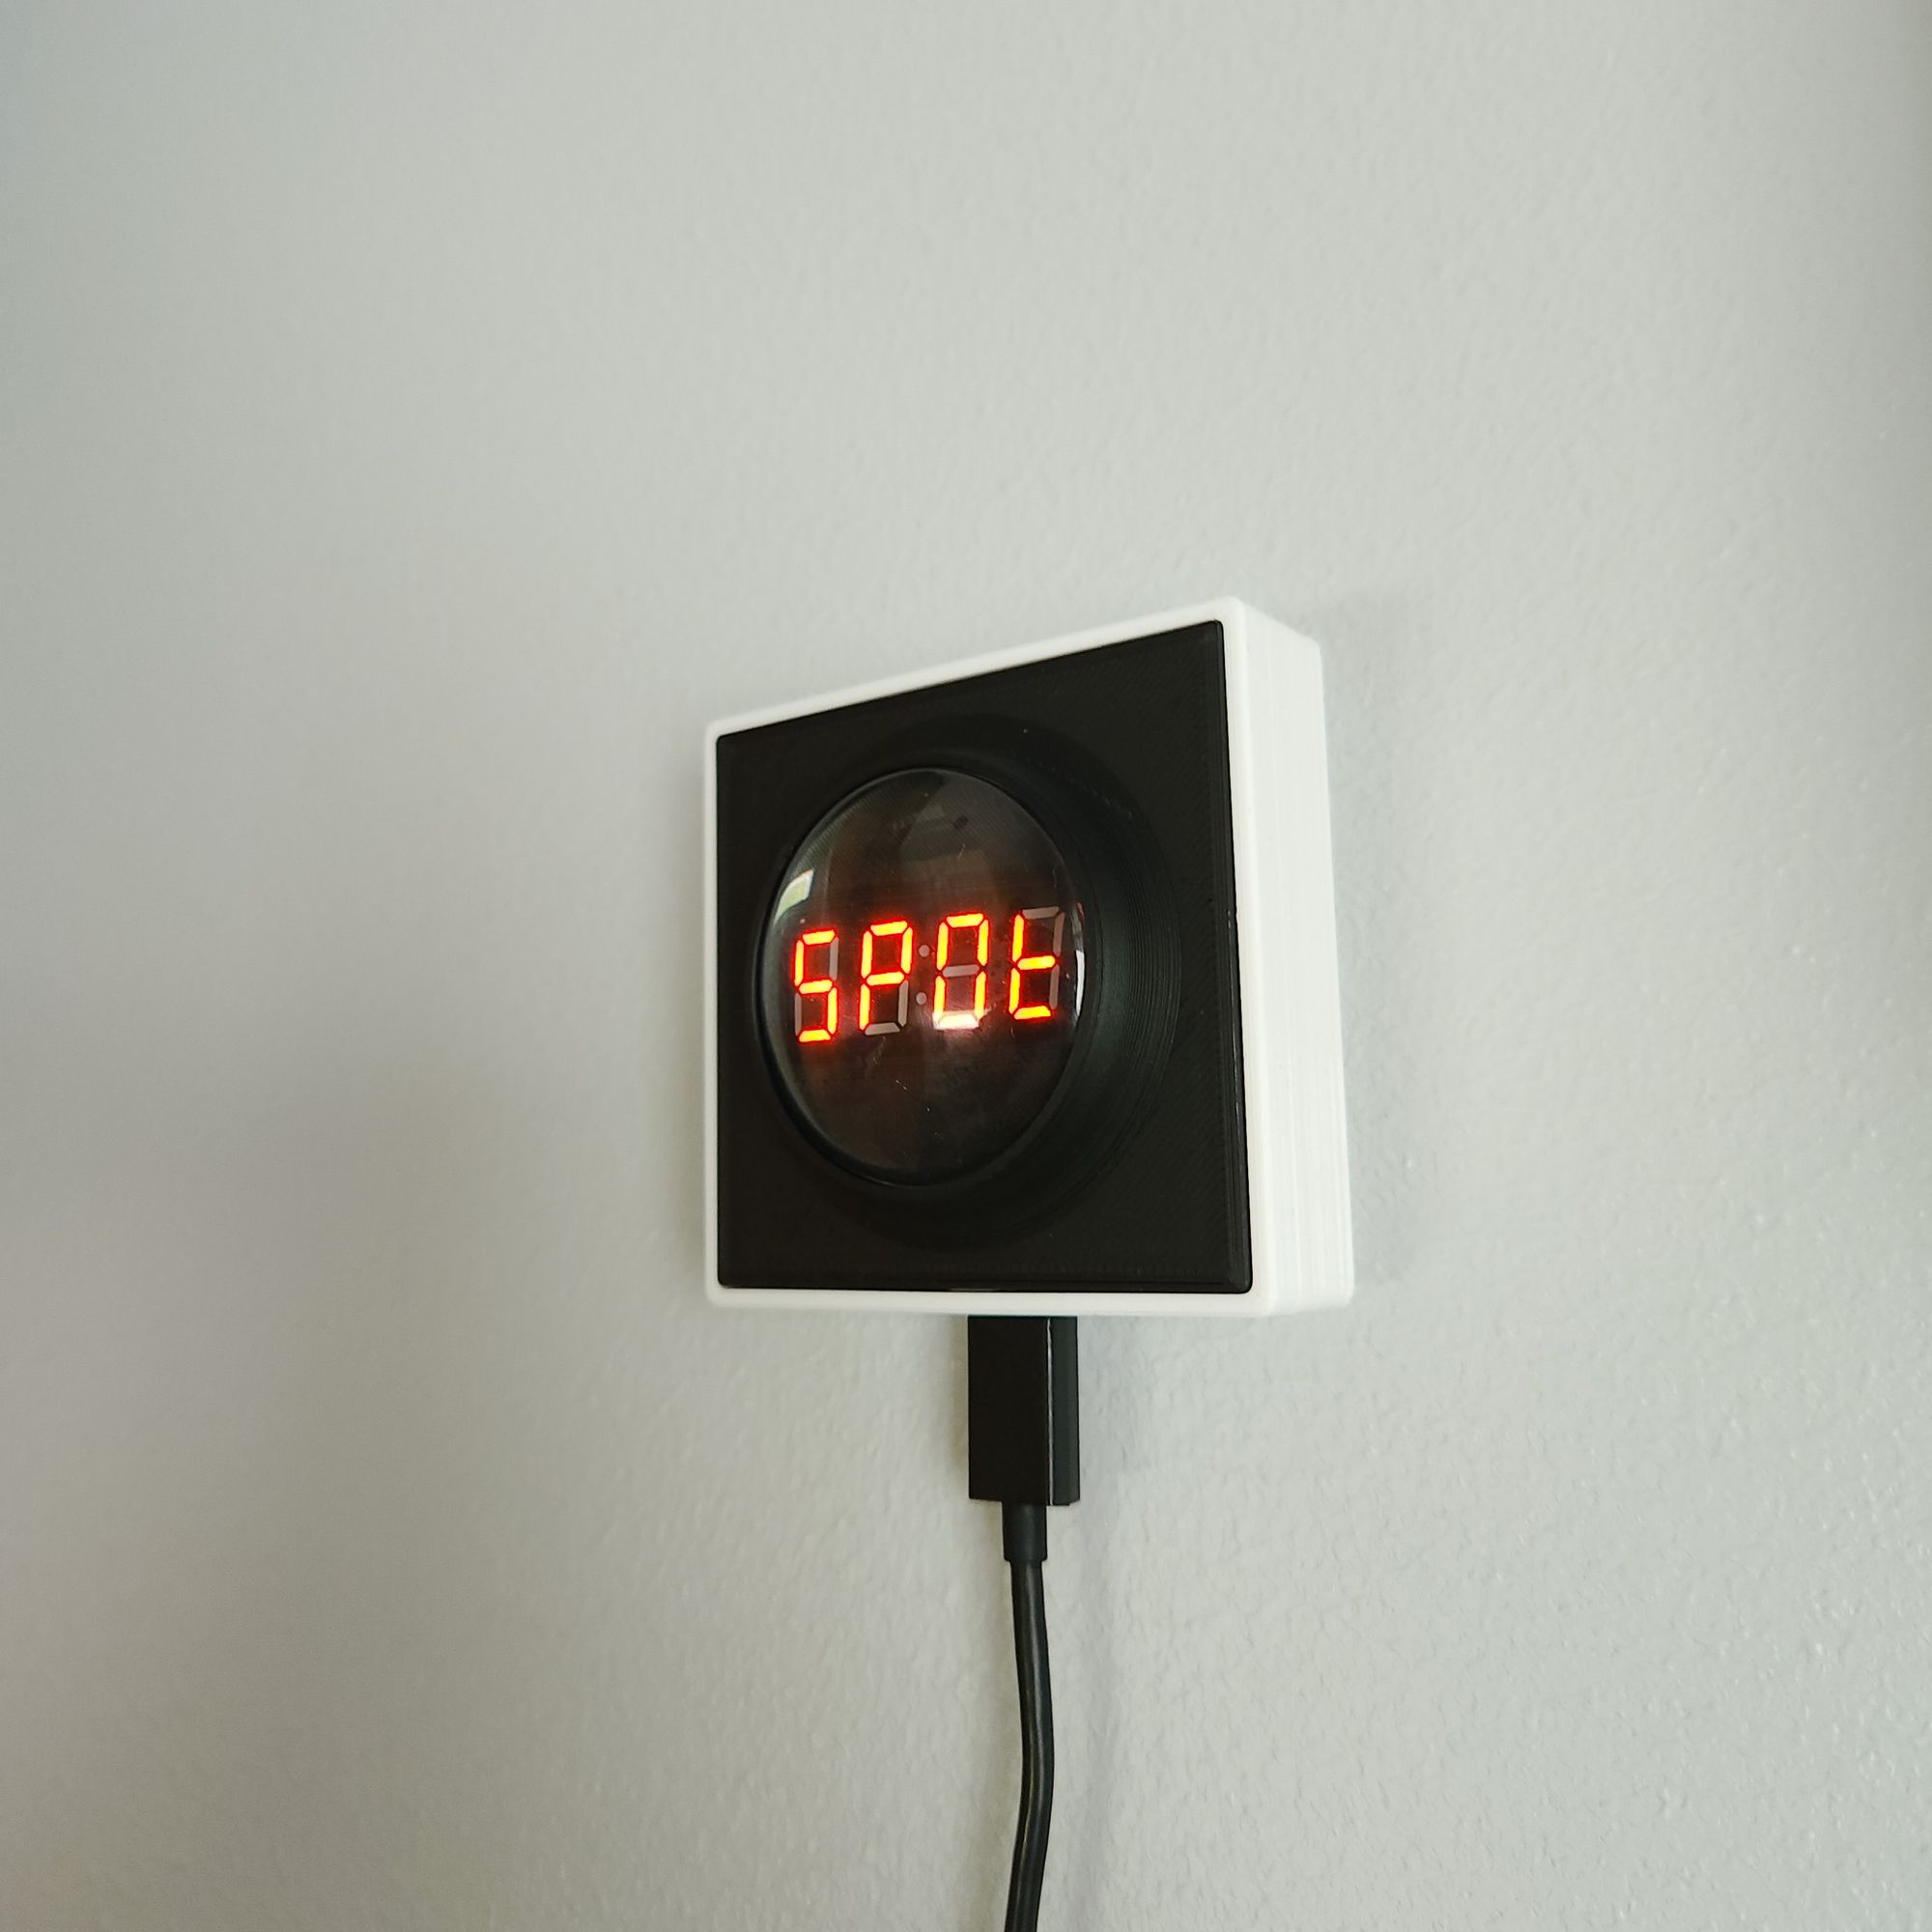 Picoclock - Smart Desktop/Wall Clock Display